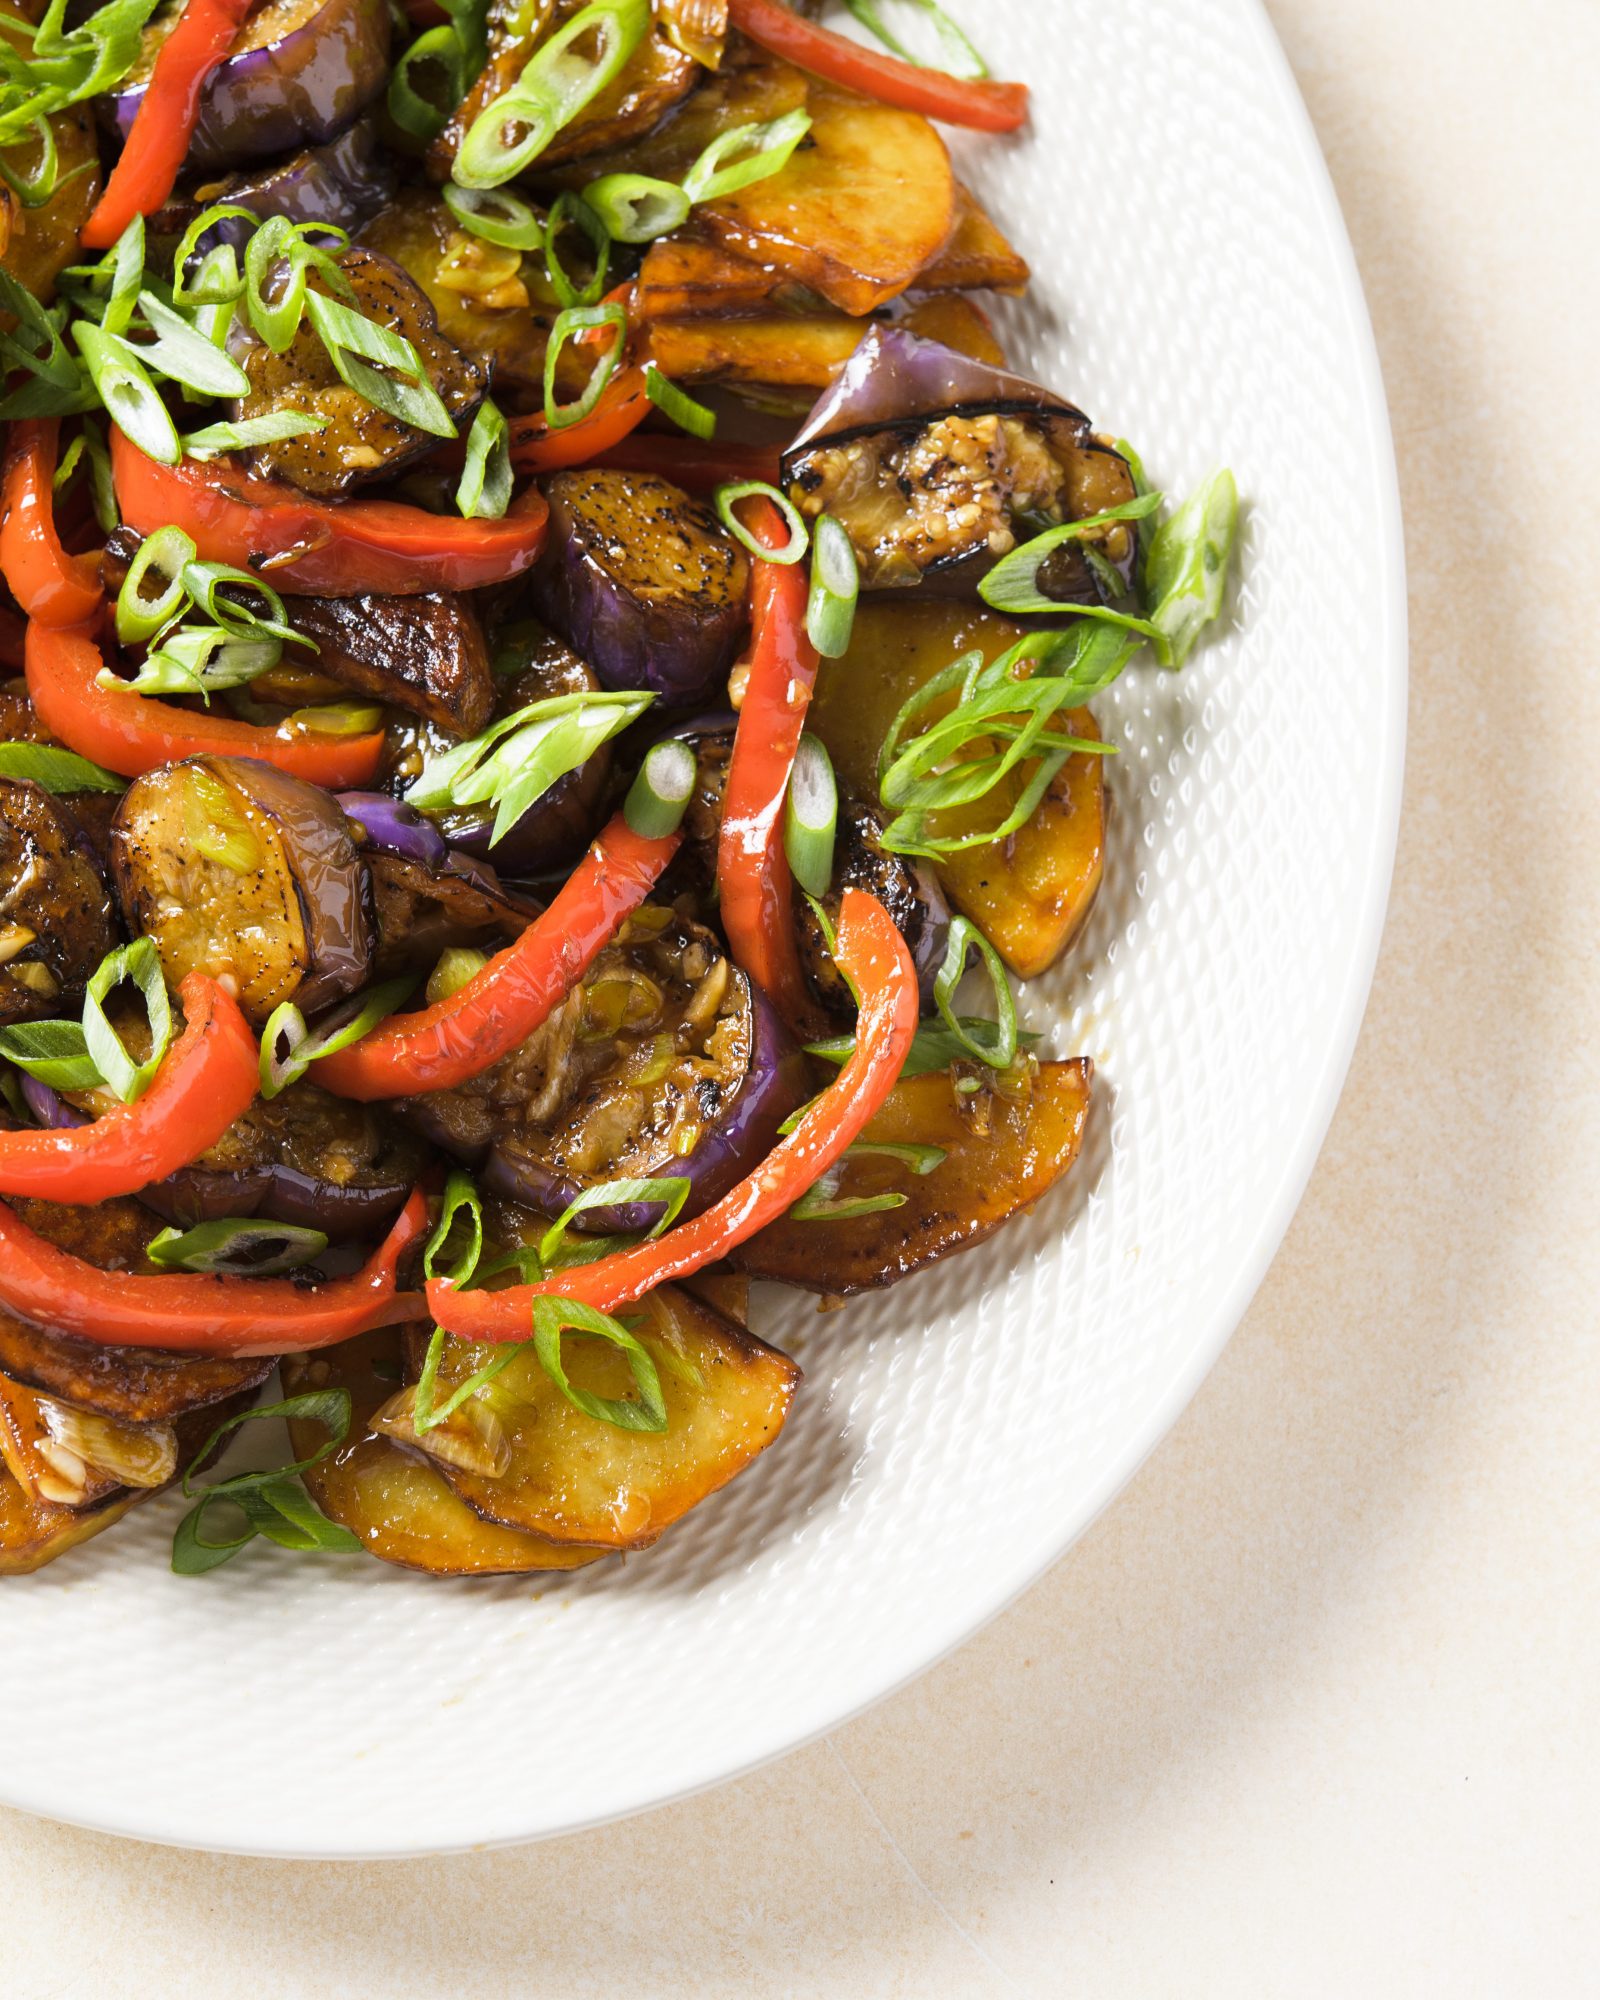 Potato eggplant pepper stir fry v